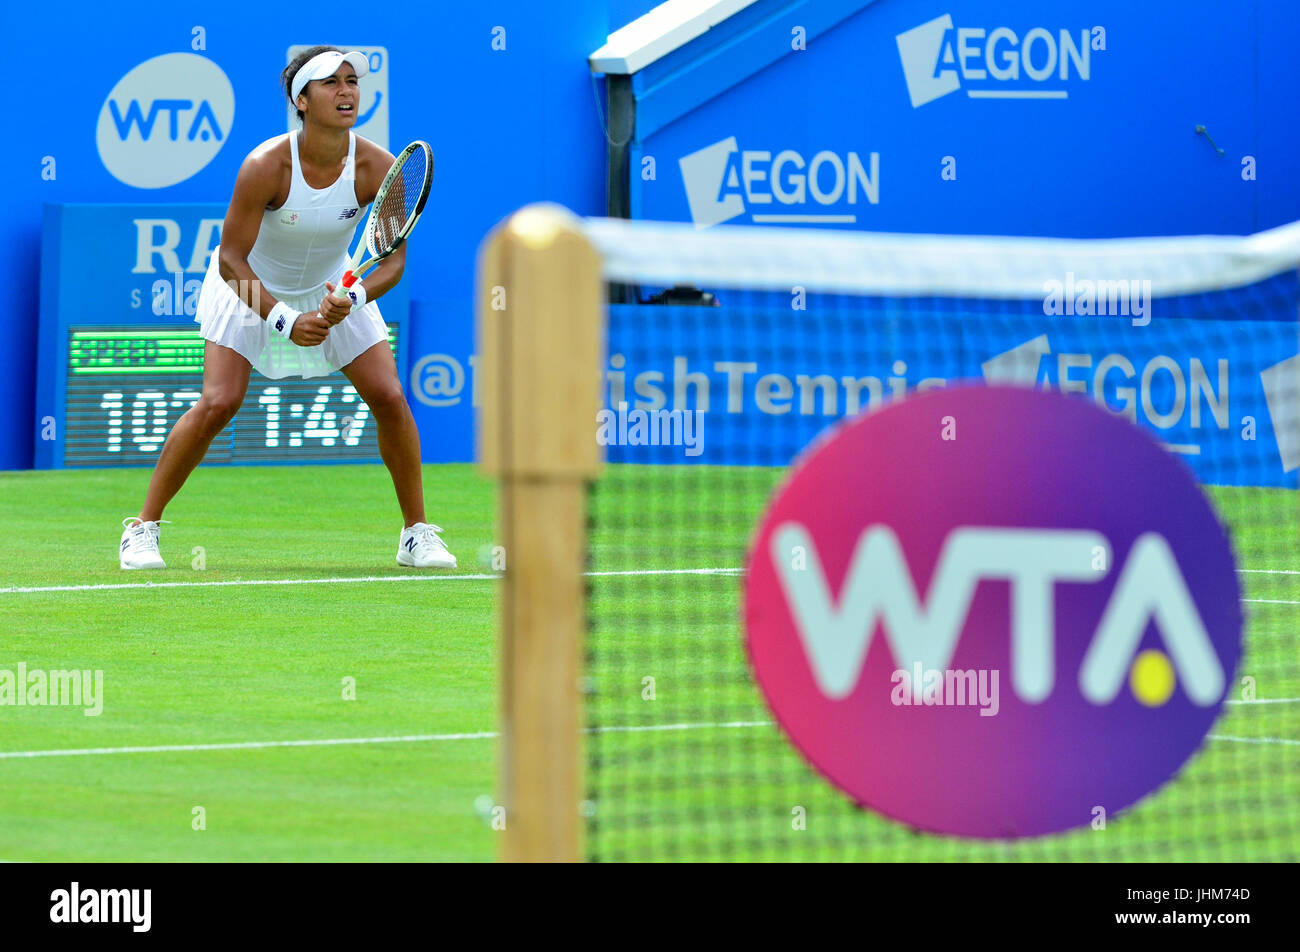 Heather Watson (GB) playing at the Aegon International, Eastbourne 2017. WTA logo on the net Stock Photo